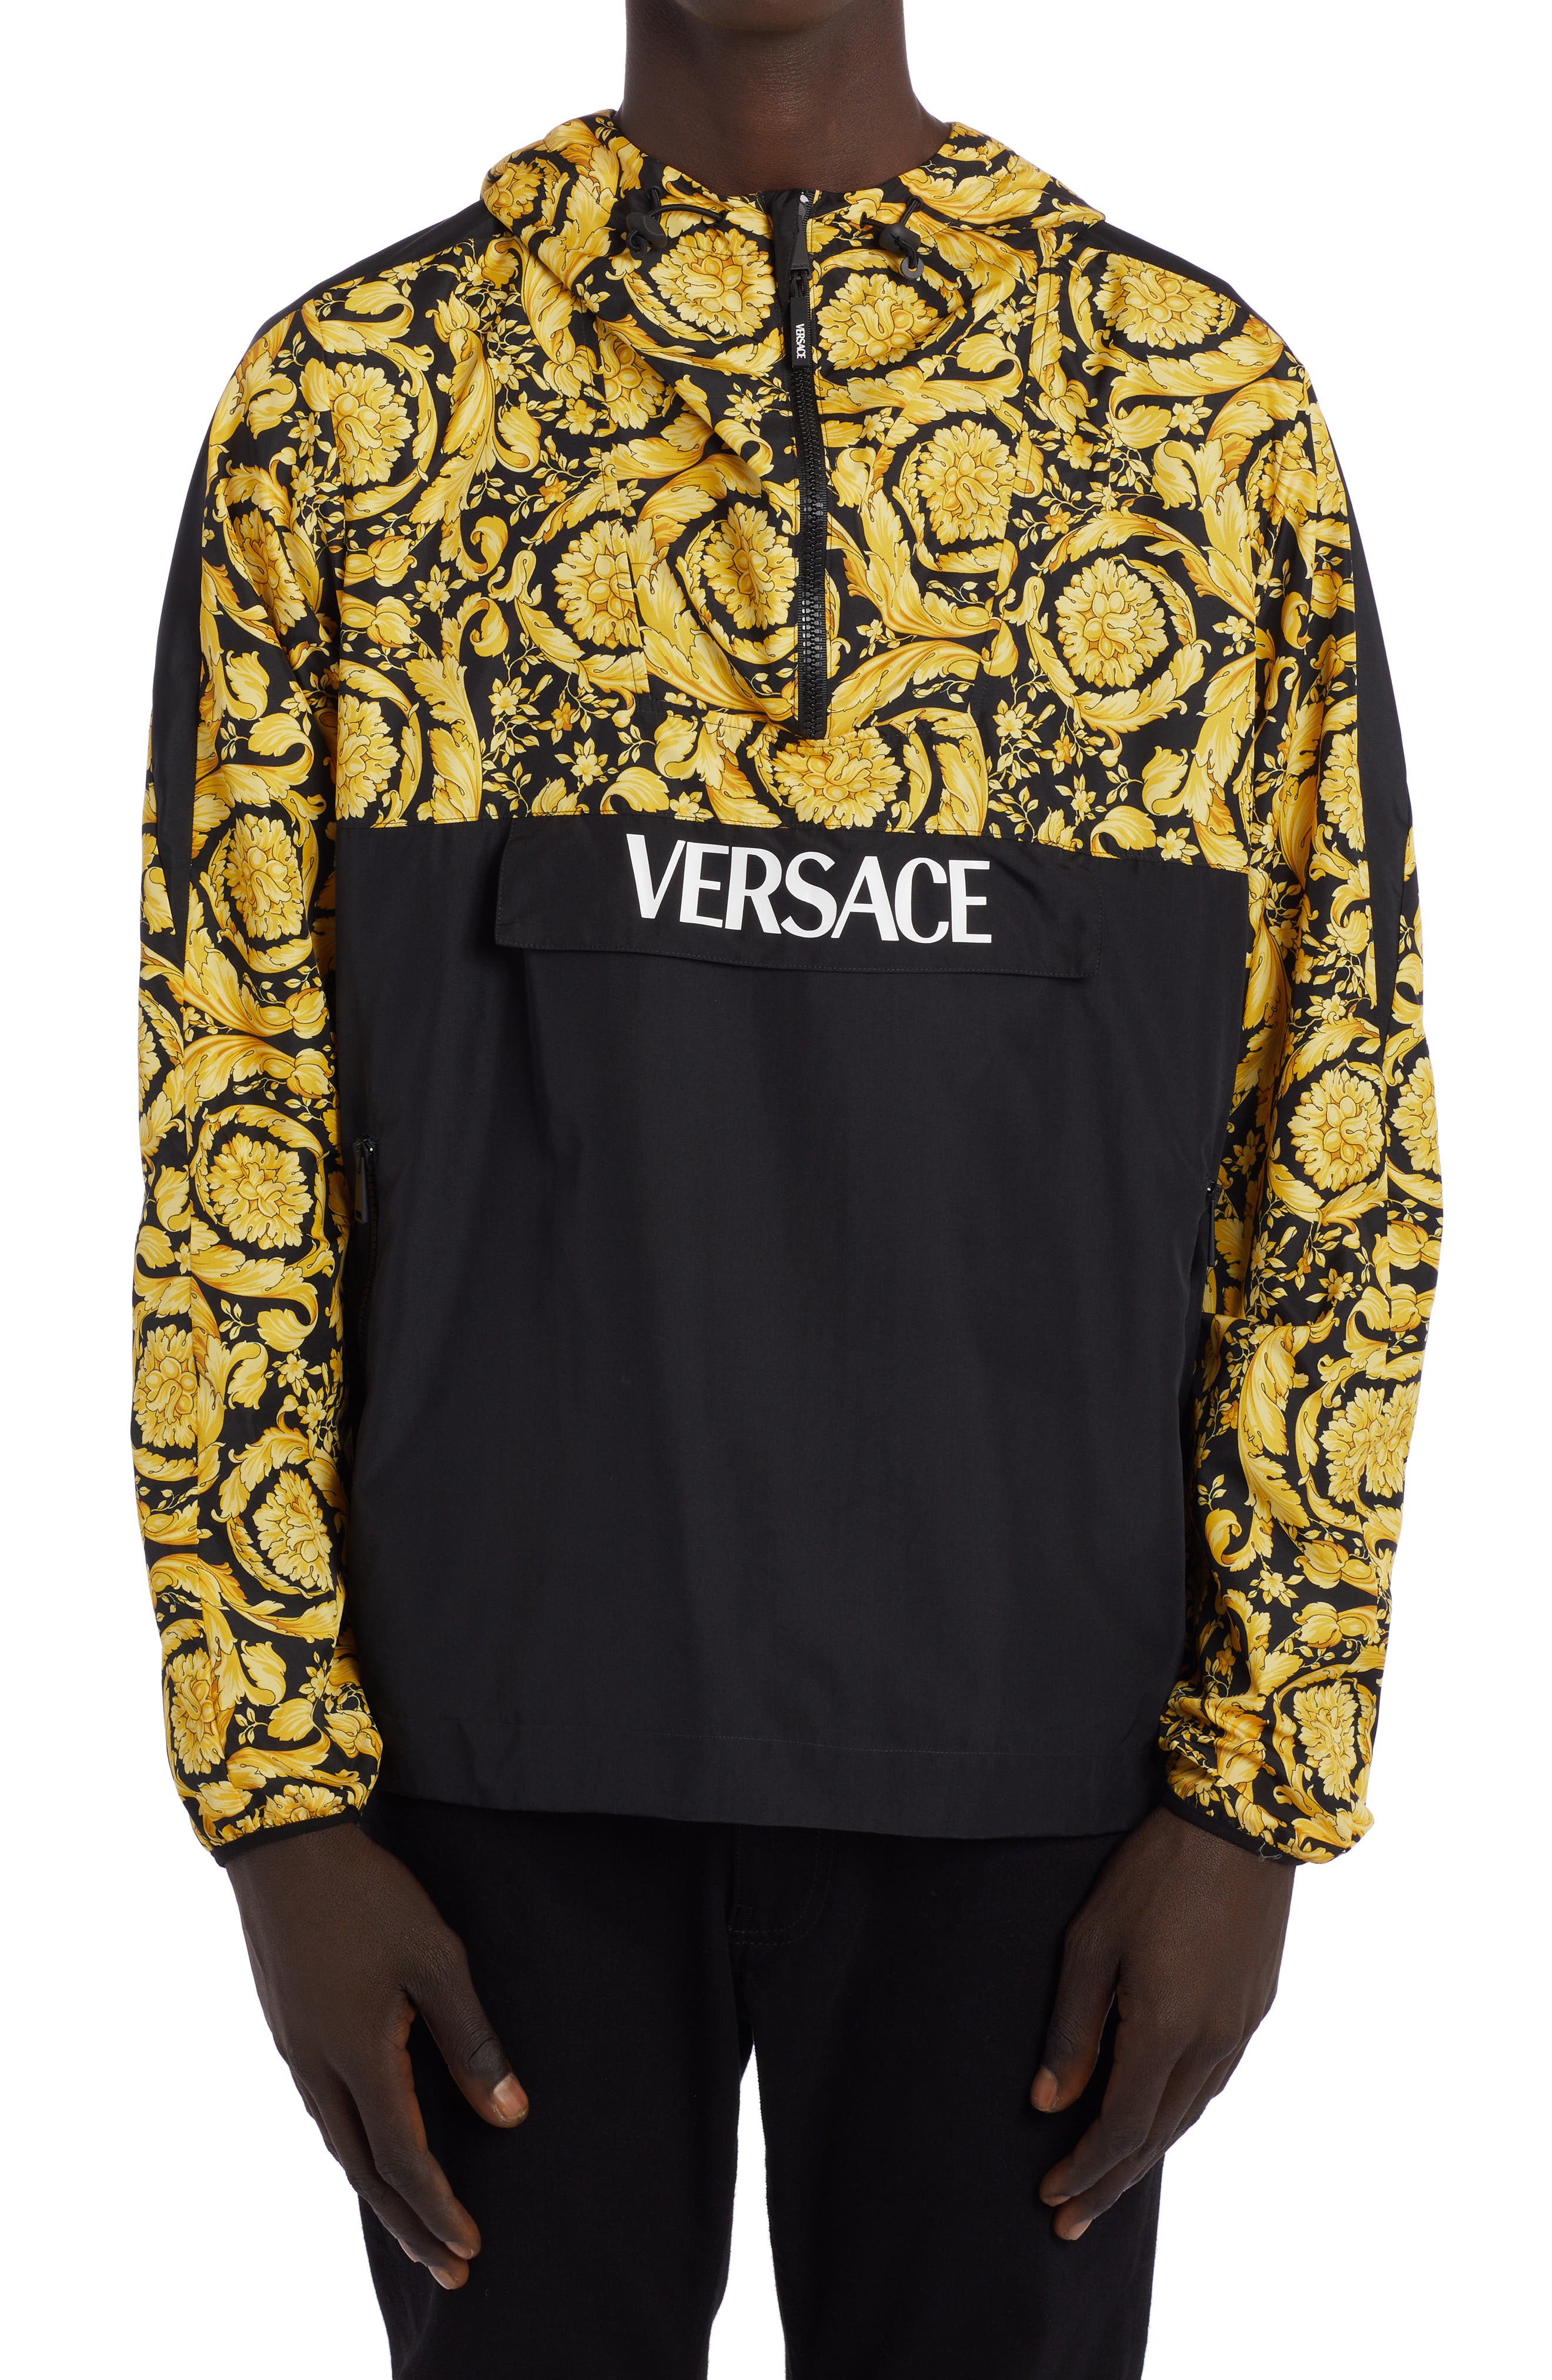 Men Versace Tracksuit Thin Jacket and Pants Long Sleeve Size S M L XL XXL